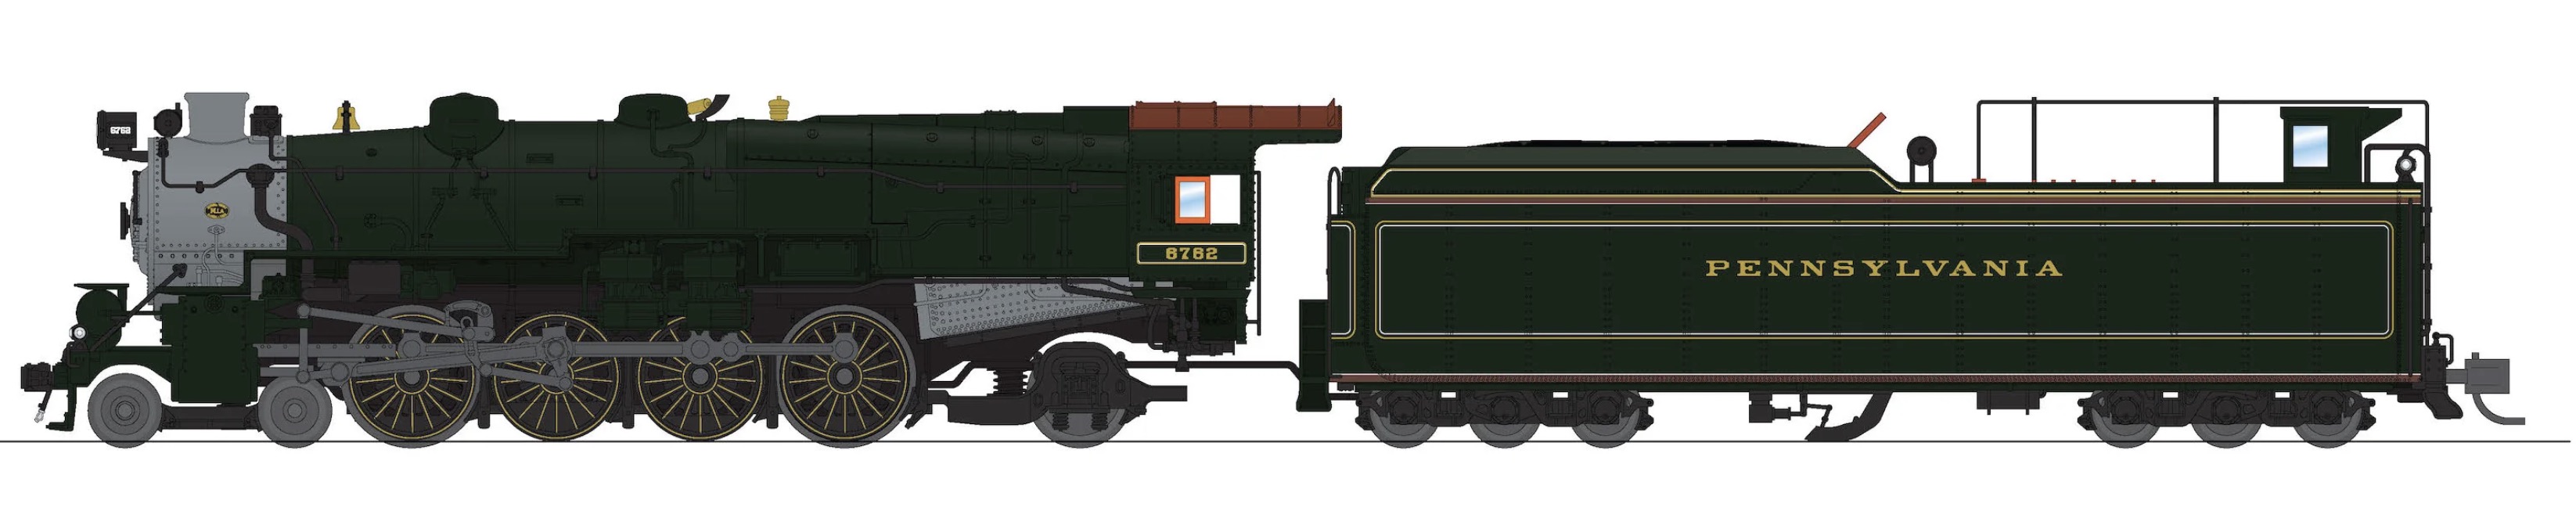 N Scale - Broadway Limited - 8518 - Locomotive, Steam, M1b 4-8-2 - Pennsylvania - 6762